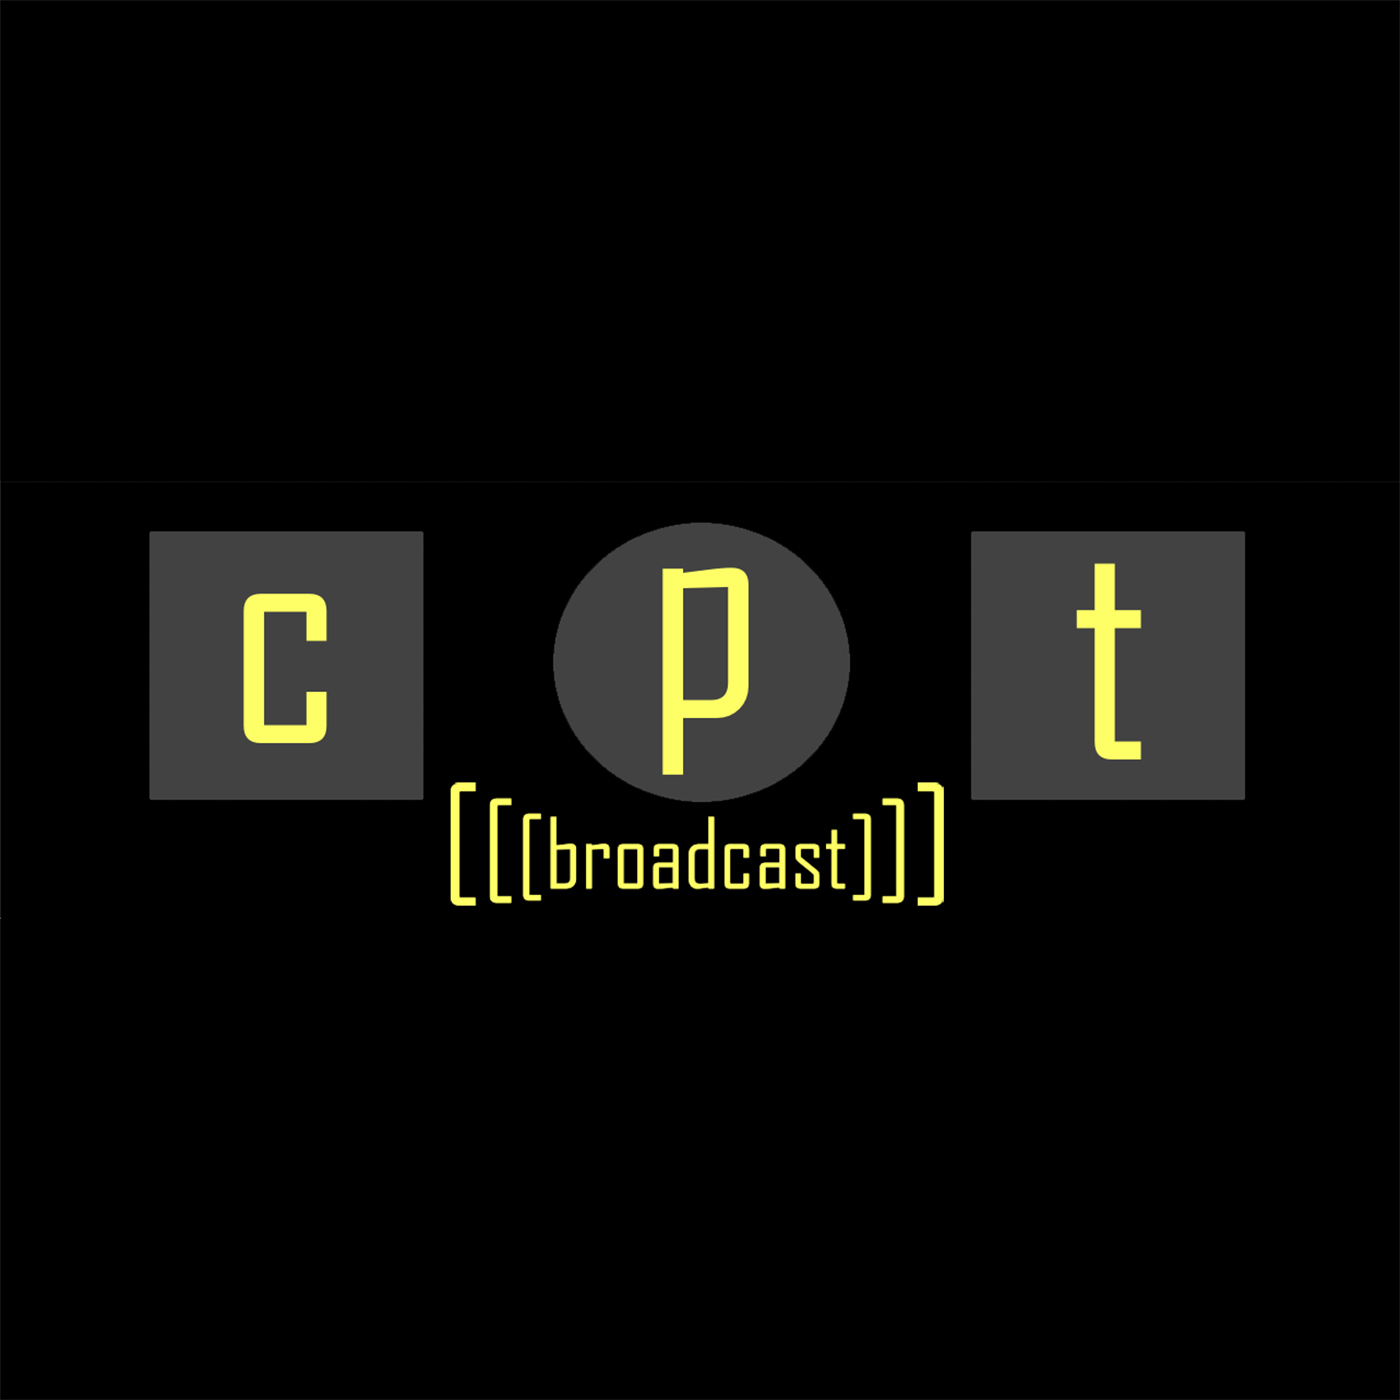 CPT Broadcast